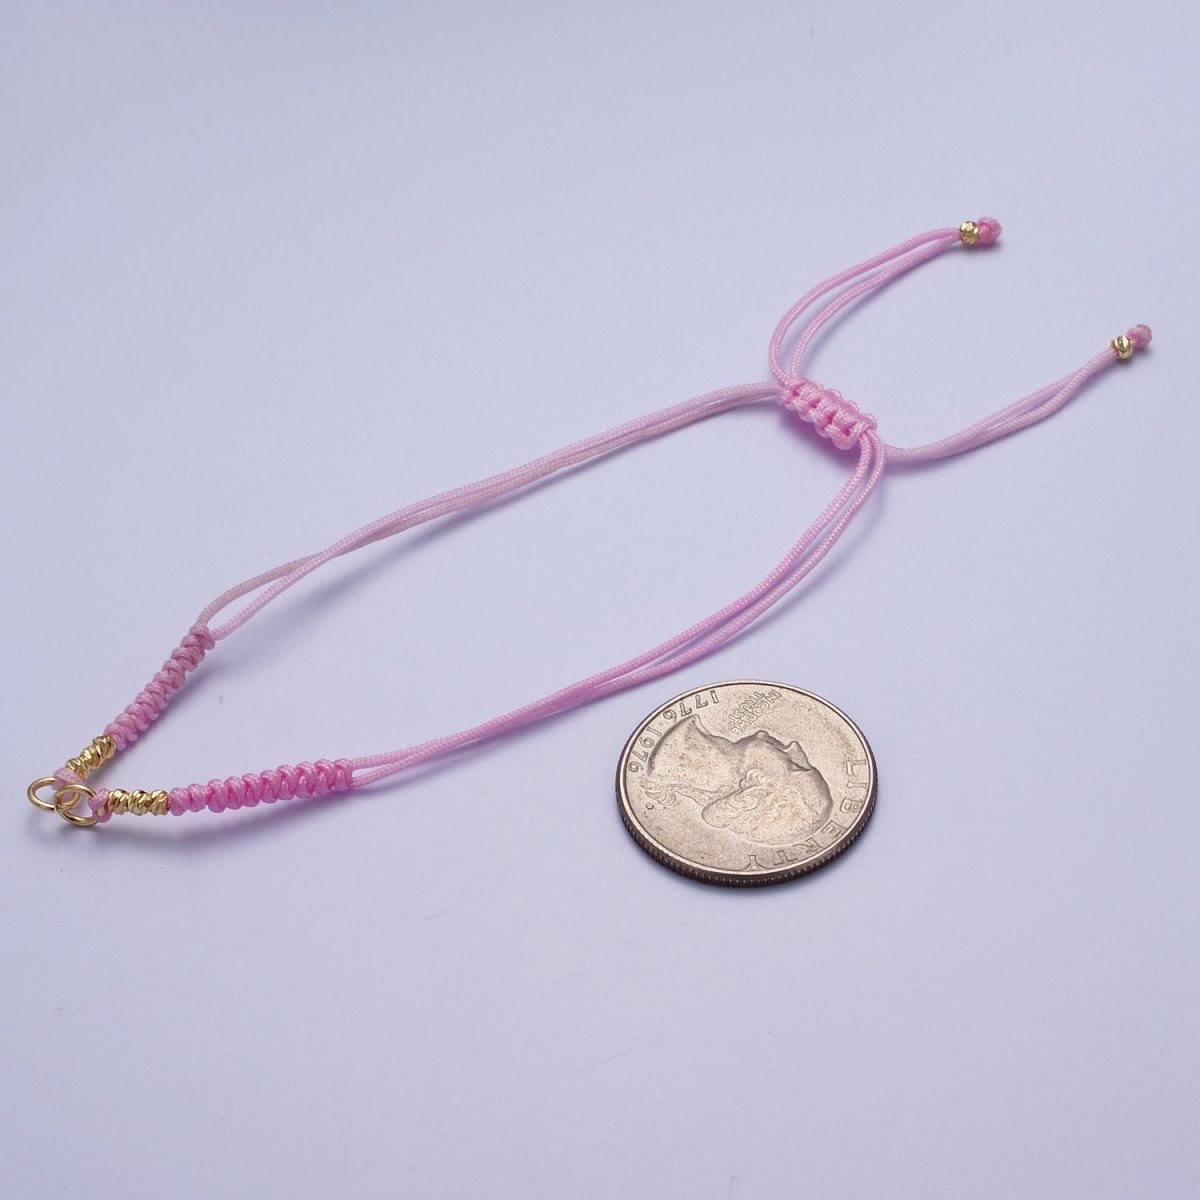 Minimalist Fabric Knot Pink/White Bracelet Making Supply Jewelry Component K-021 L-936 - DLUXCA